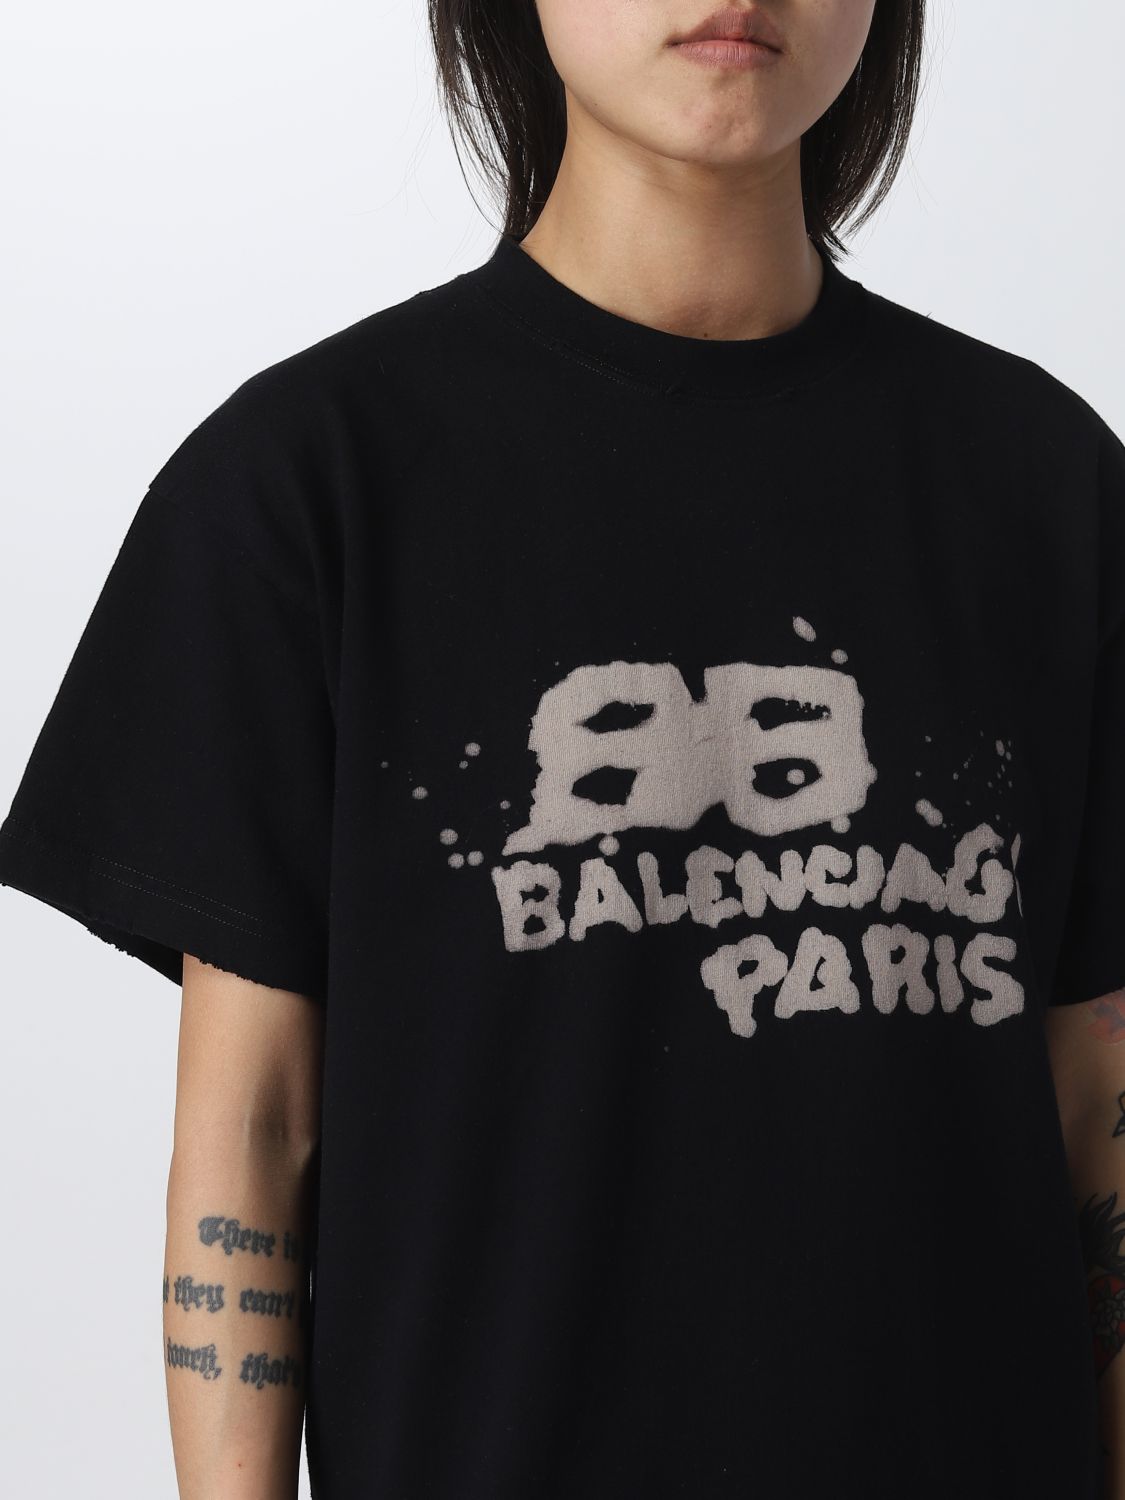 Balenciaga Paris TShirt New with tags XXL  Paris t shirt Balenciaga t  shirt Orange t shirts